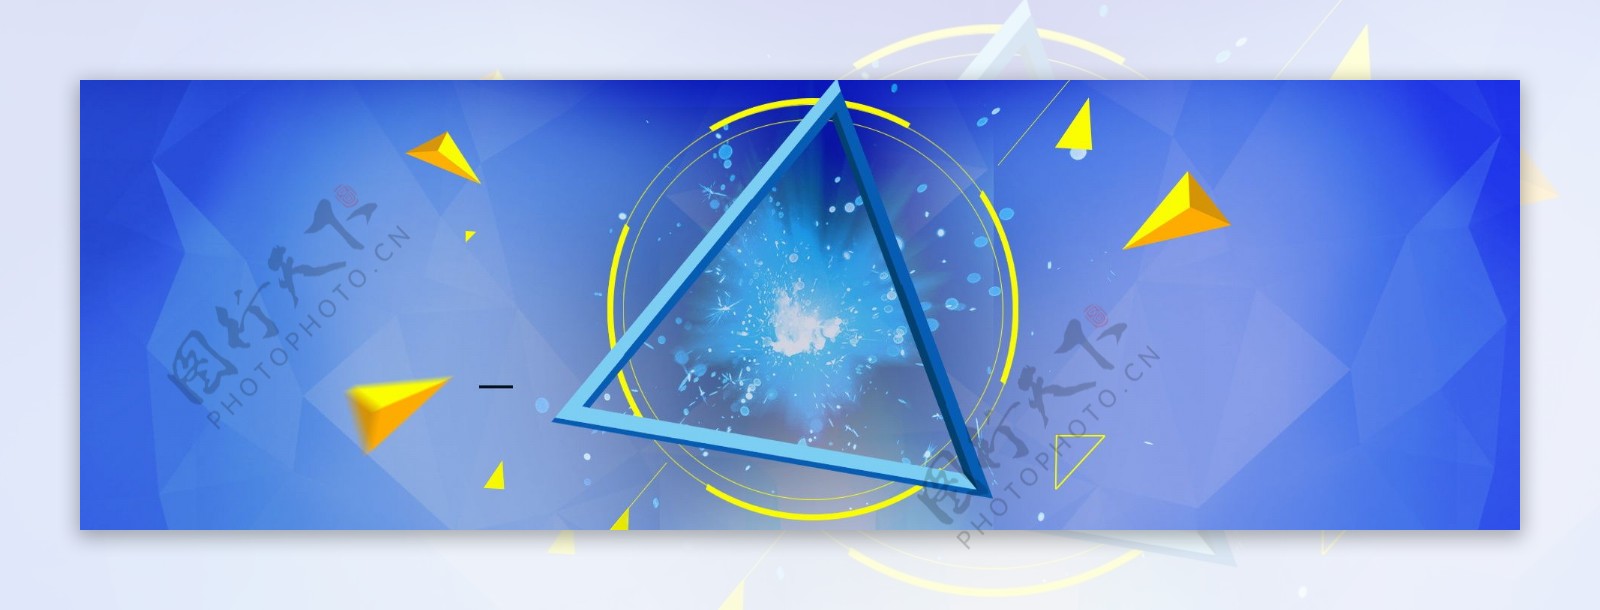 蓝色科技banner背景图